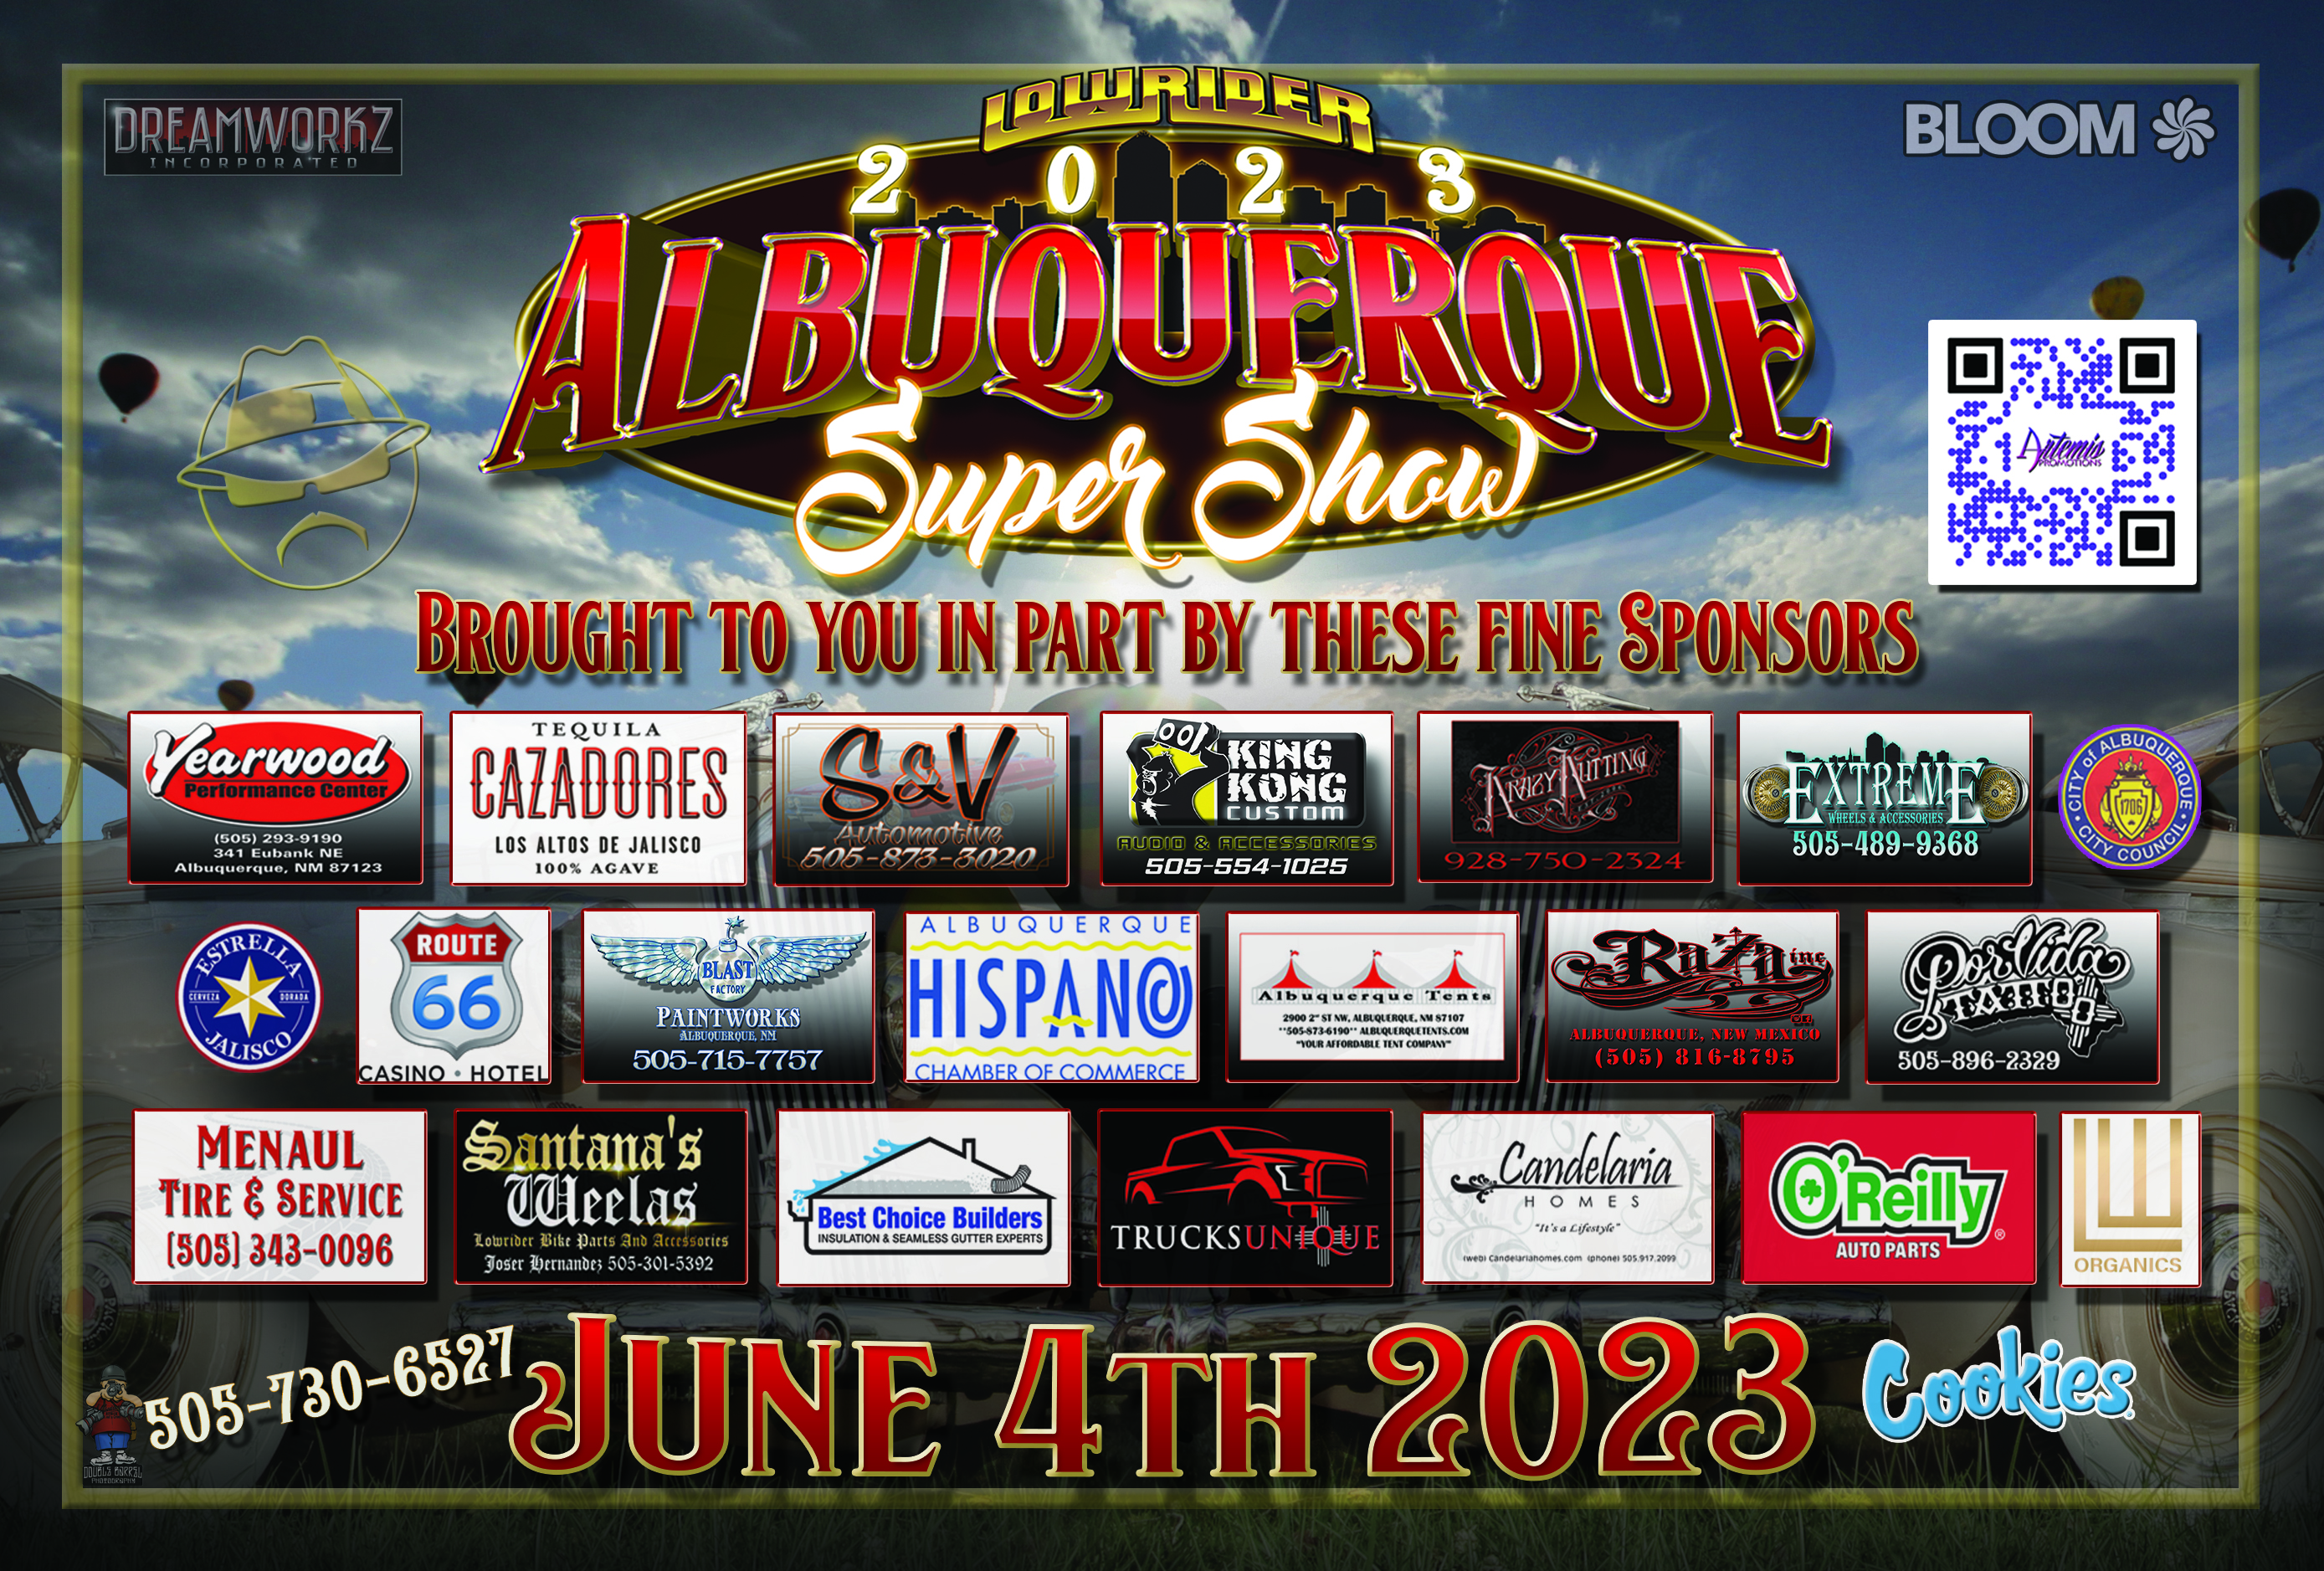 Albuquerque Super Show Sponsors 2023